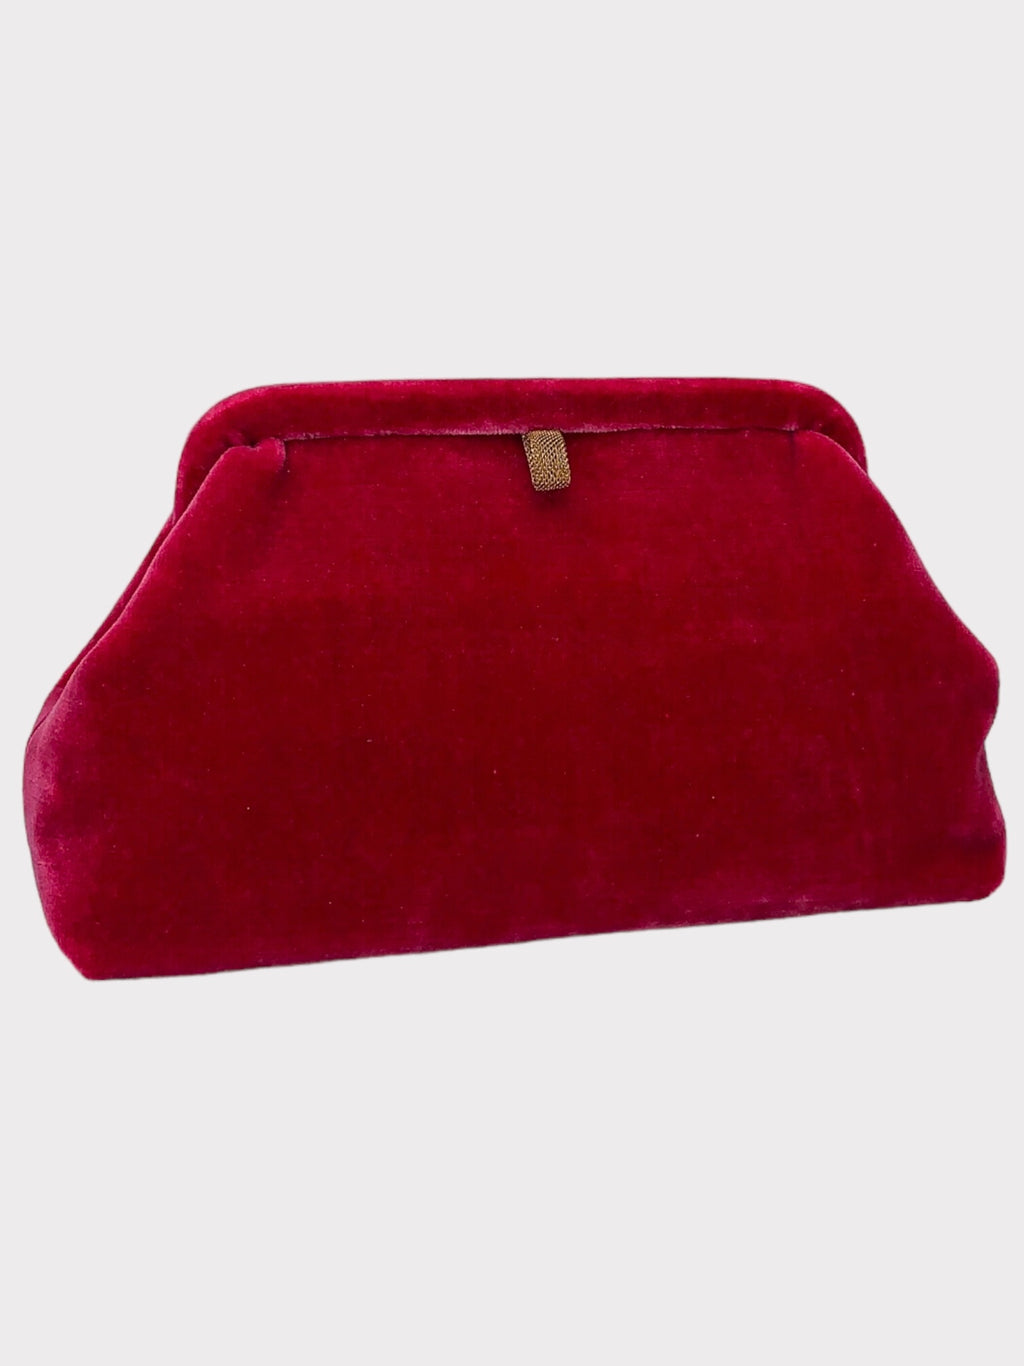 Vintage Red Velvet Clutch | Garay Velvet Handbag with Rhinestone Clasp | Party Purse